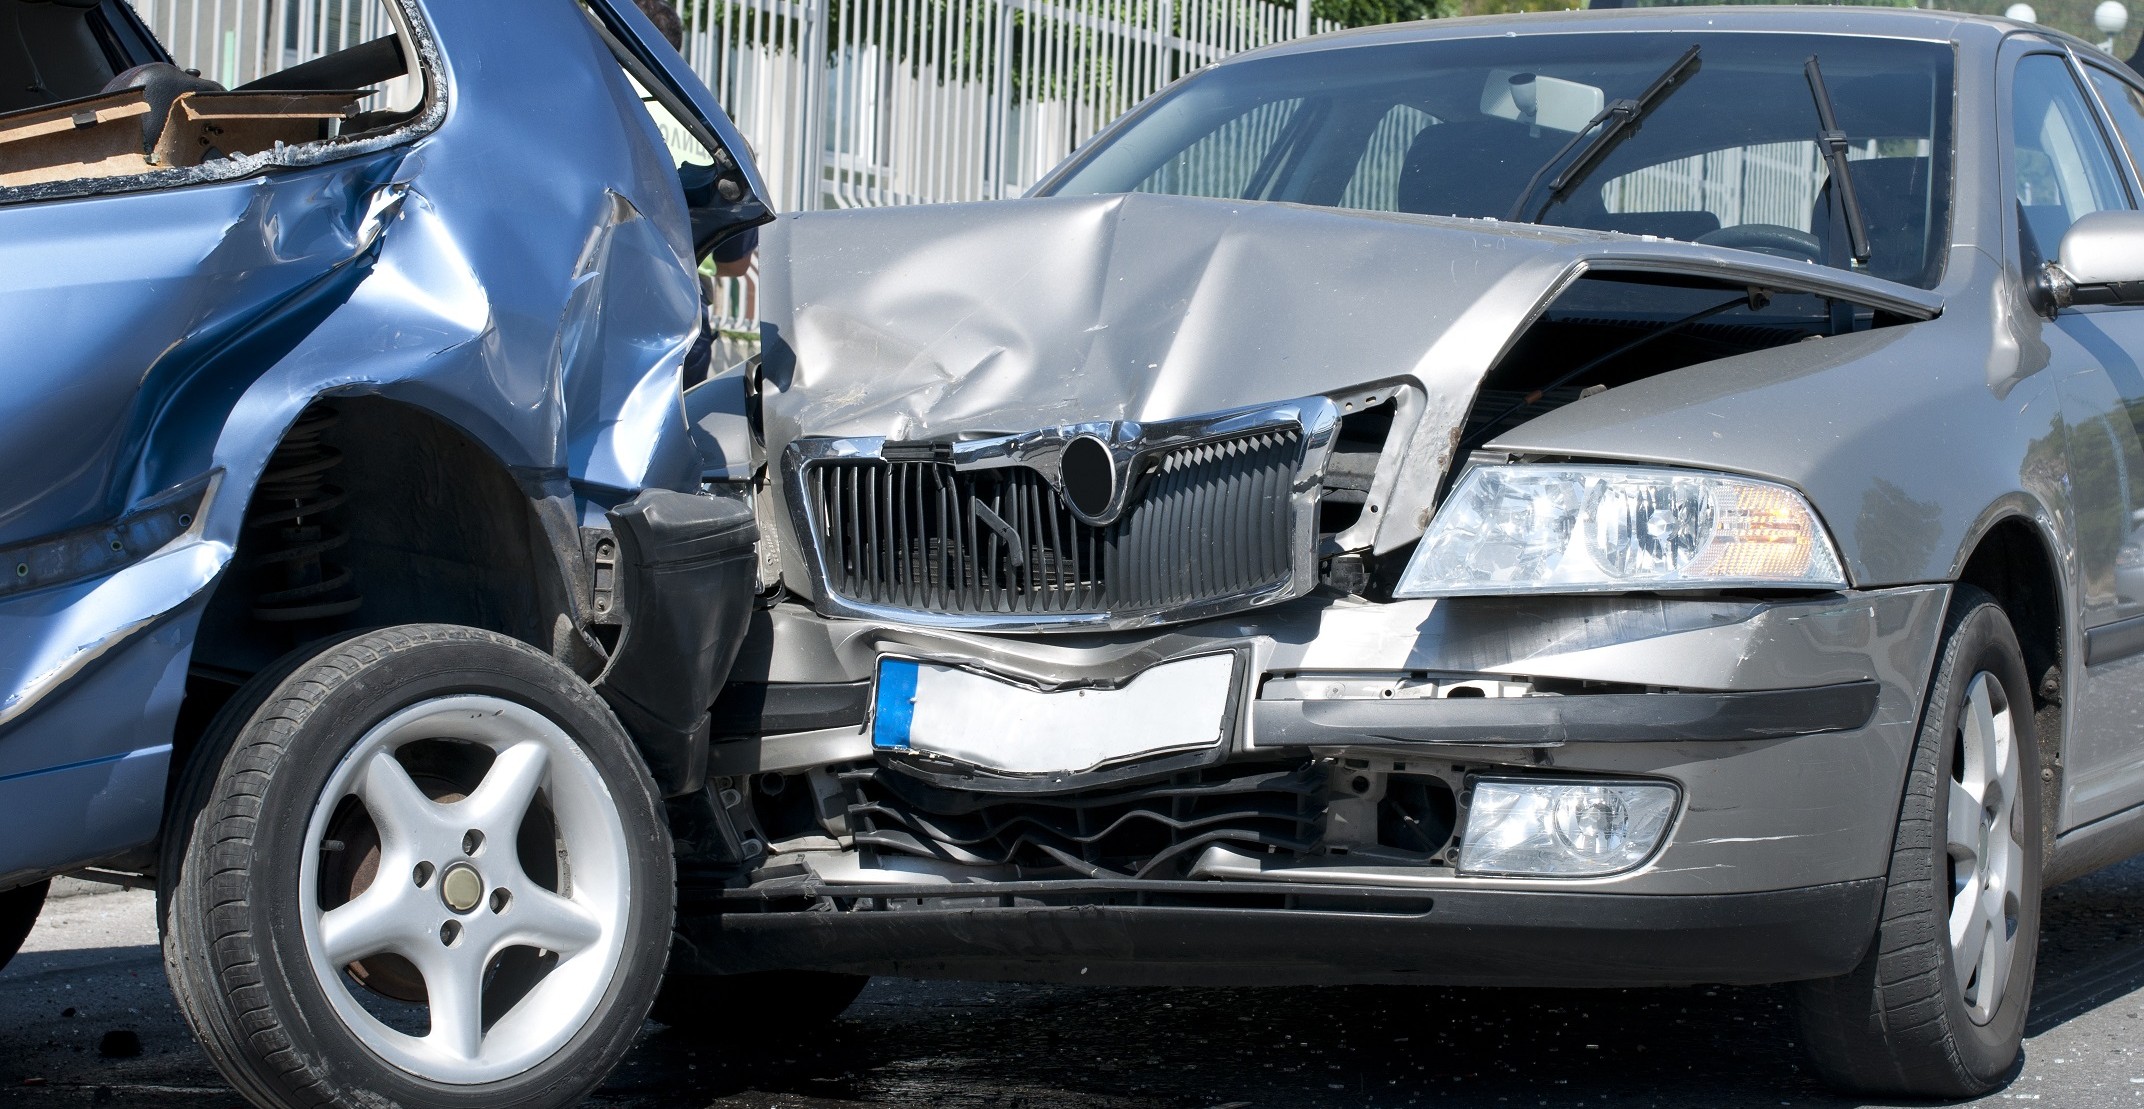 West Palm Beach Car Accident Lawyer - Gordon & Partners